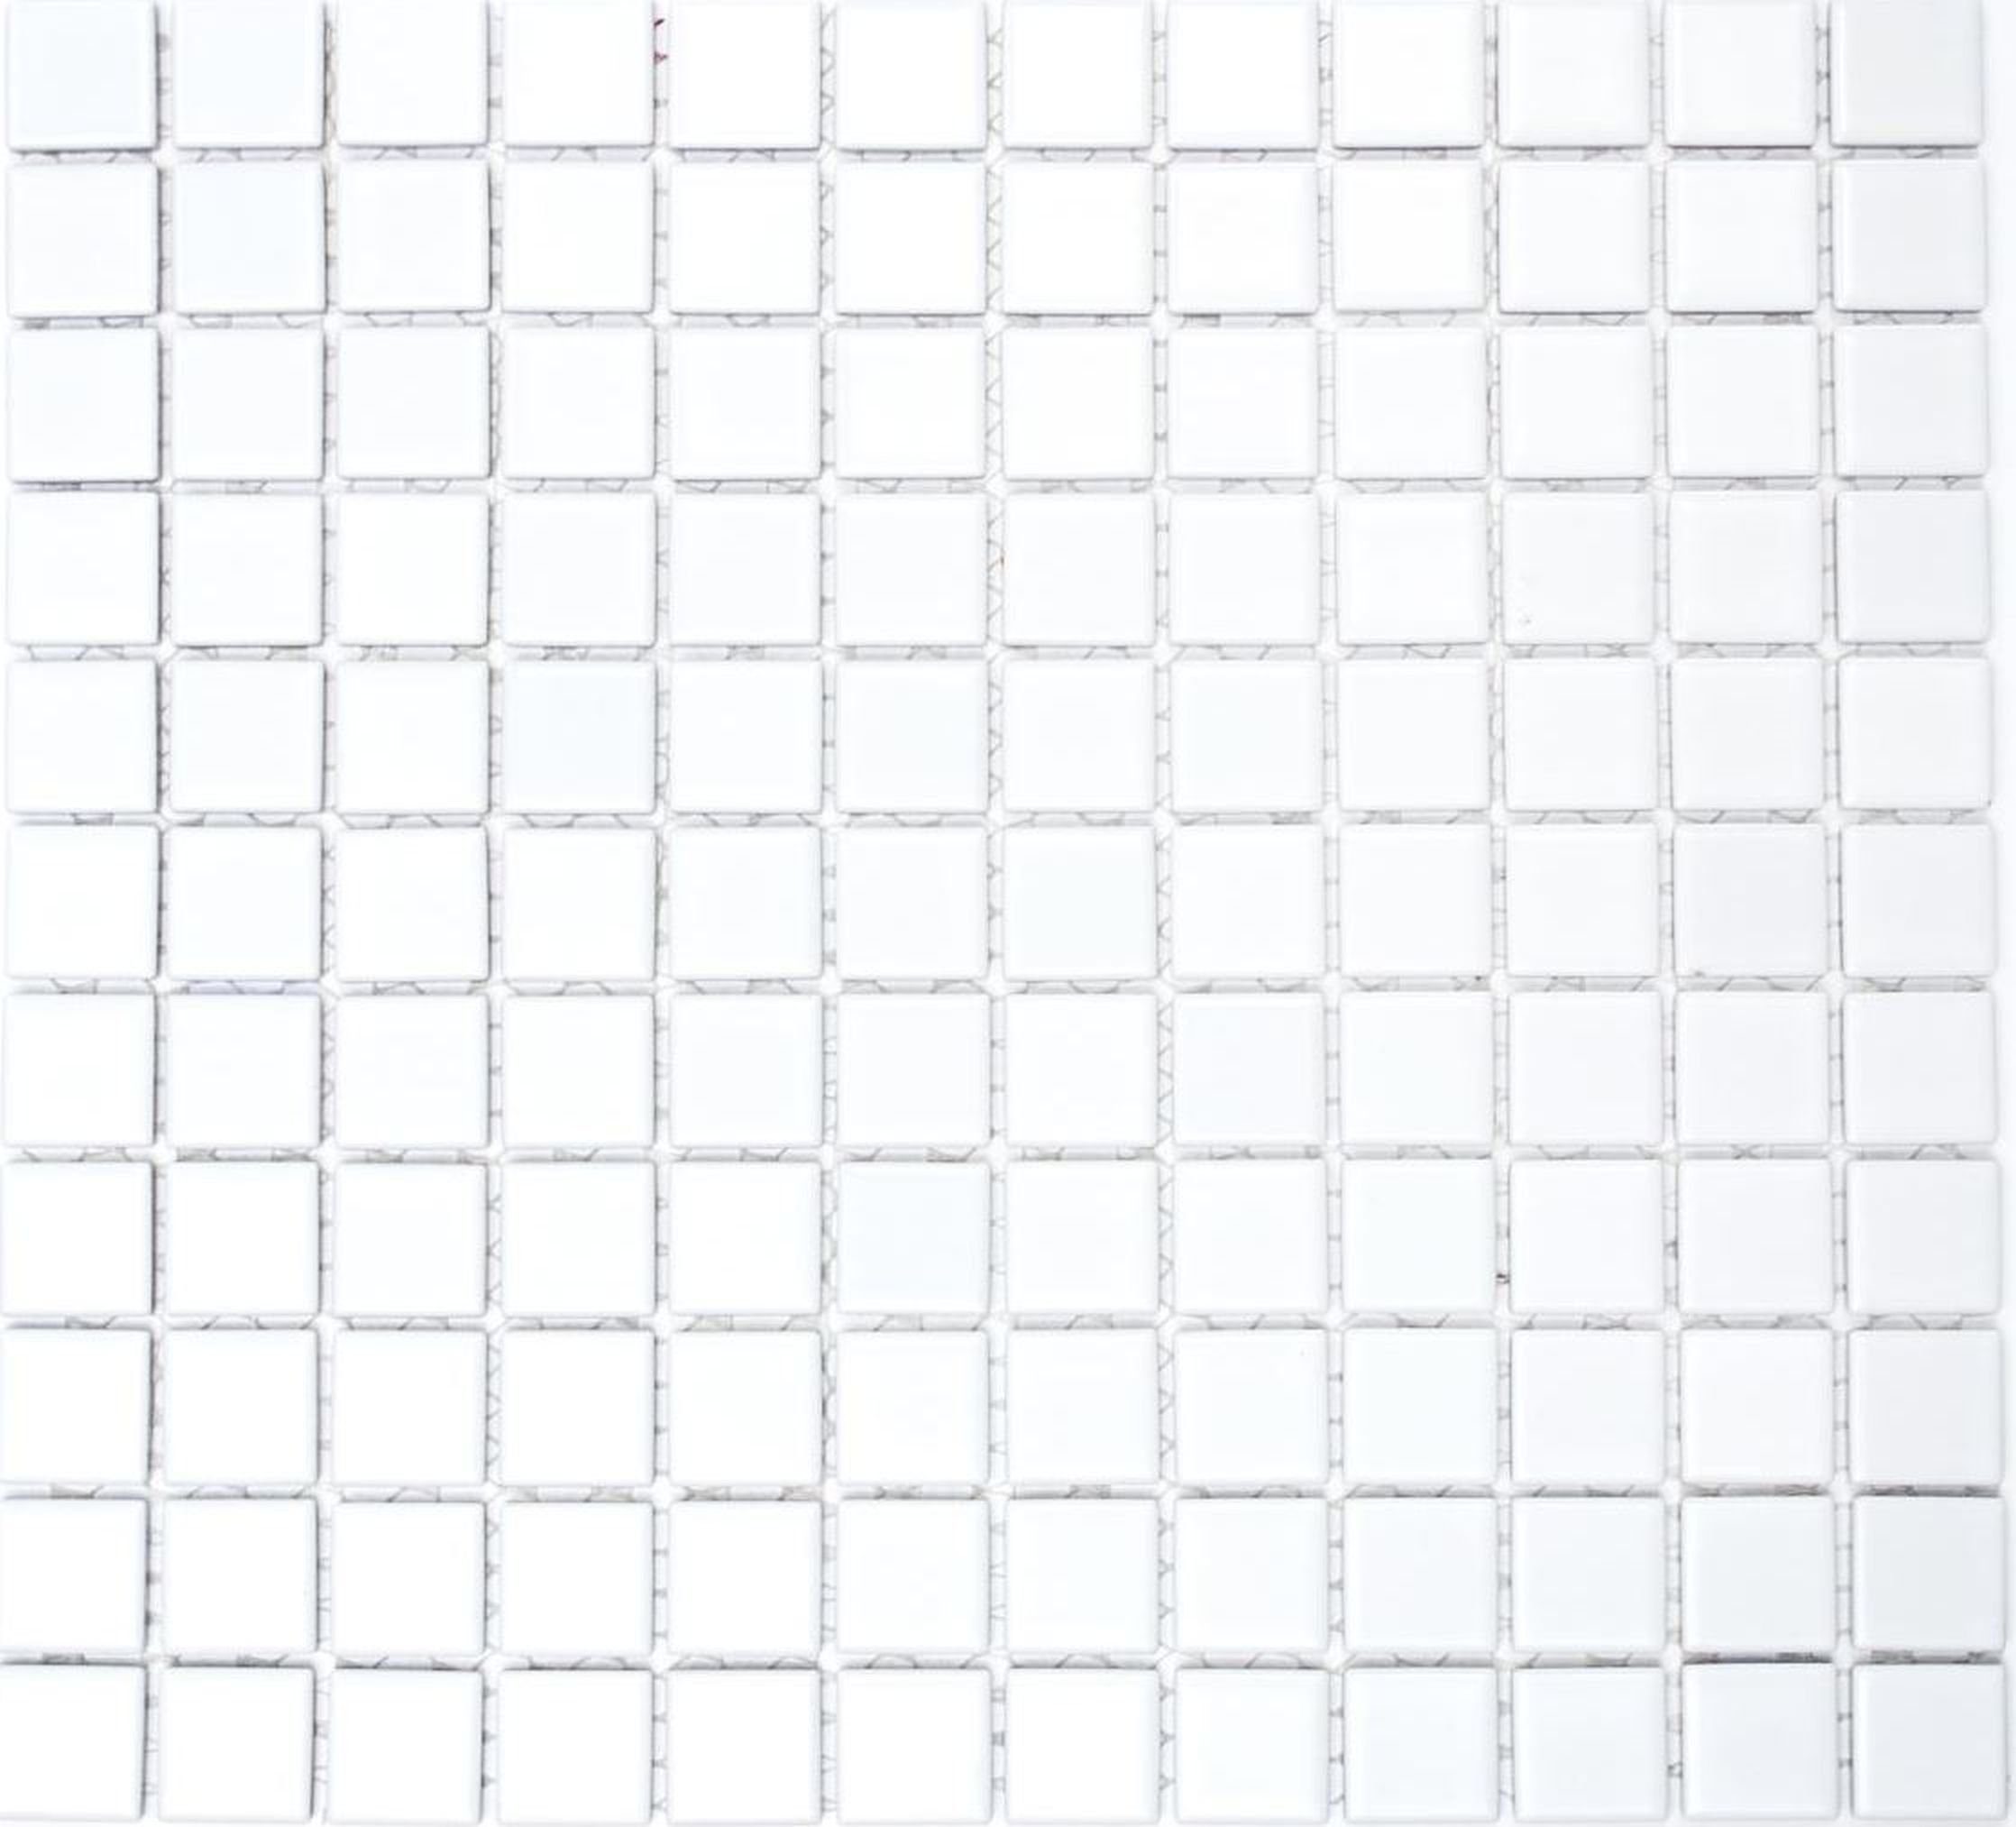 Mosani Mosaikfliesen Keramikmosaik Mosaikfliesen weiß glänzend Küche Wand Dusche Pool